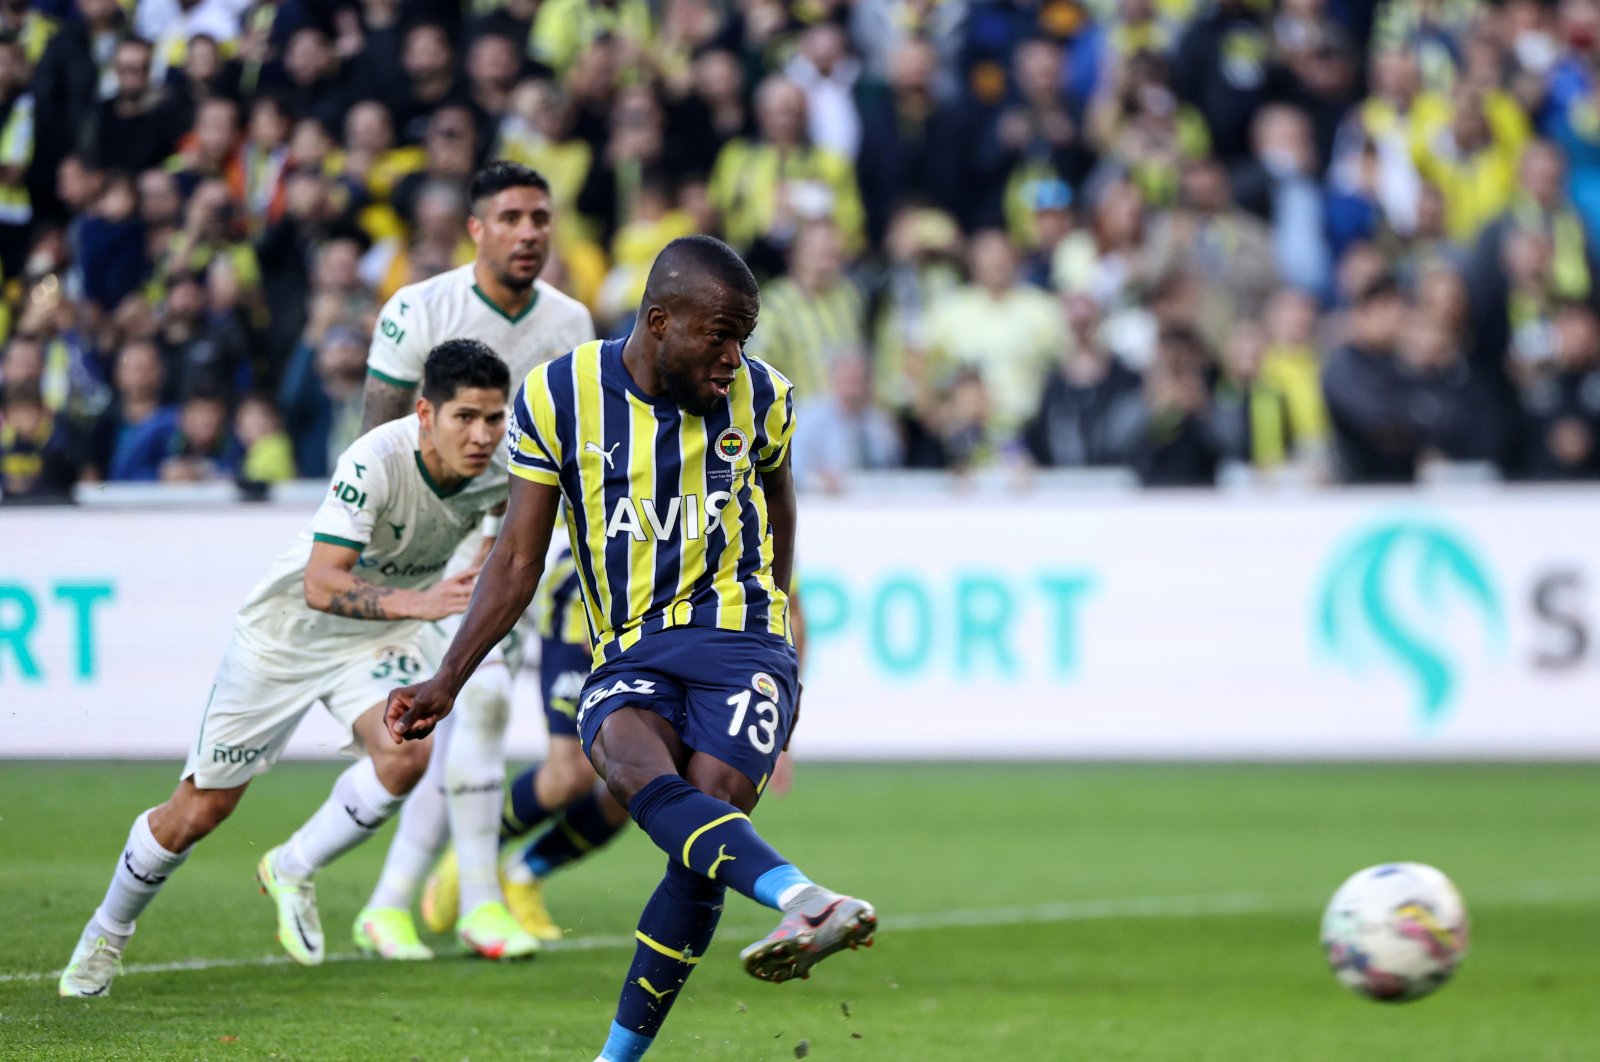 Fenerbahçe&#039;s Enner Valencia converts a penalty kick into a goal against Bitexen Giresunpor at the Ülker Fenerbahçe Şükrü Saraçoğlu Stadium, Istanbul, Türkiye, Nov. 12, 2022. (AA Photo)